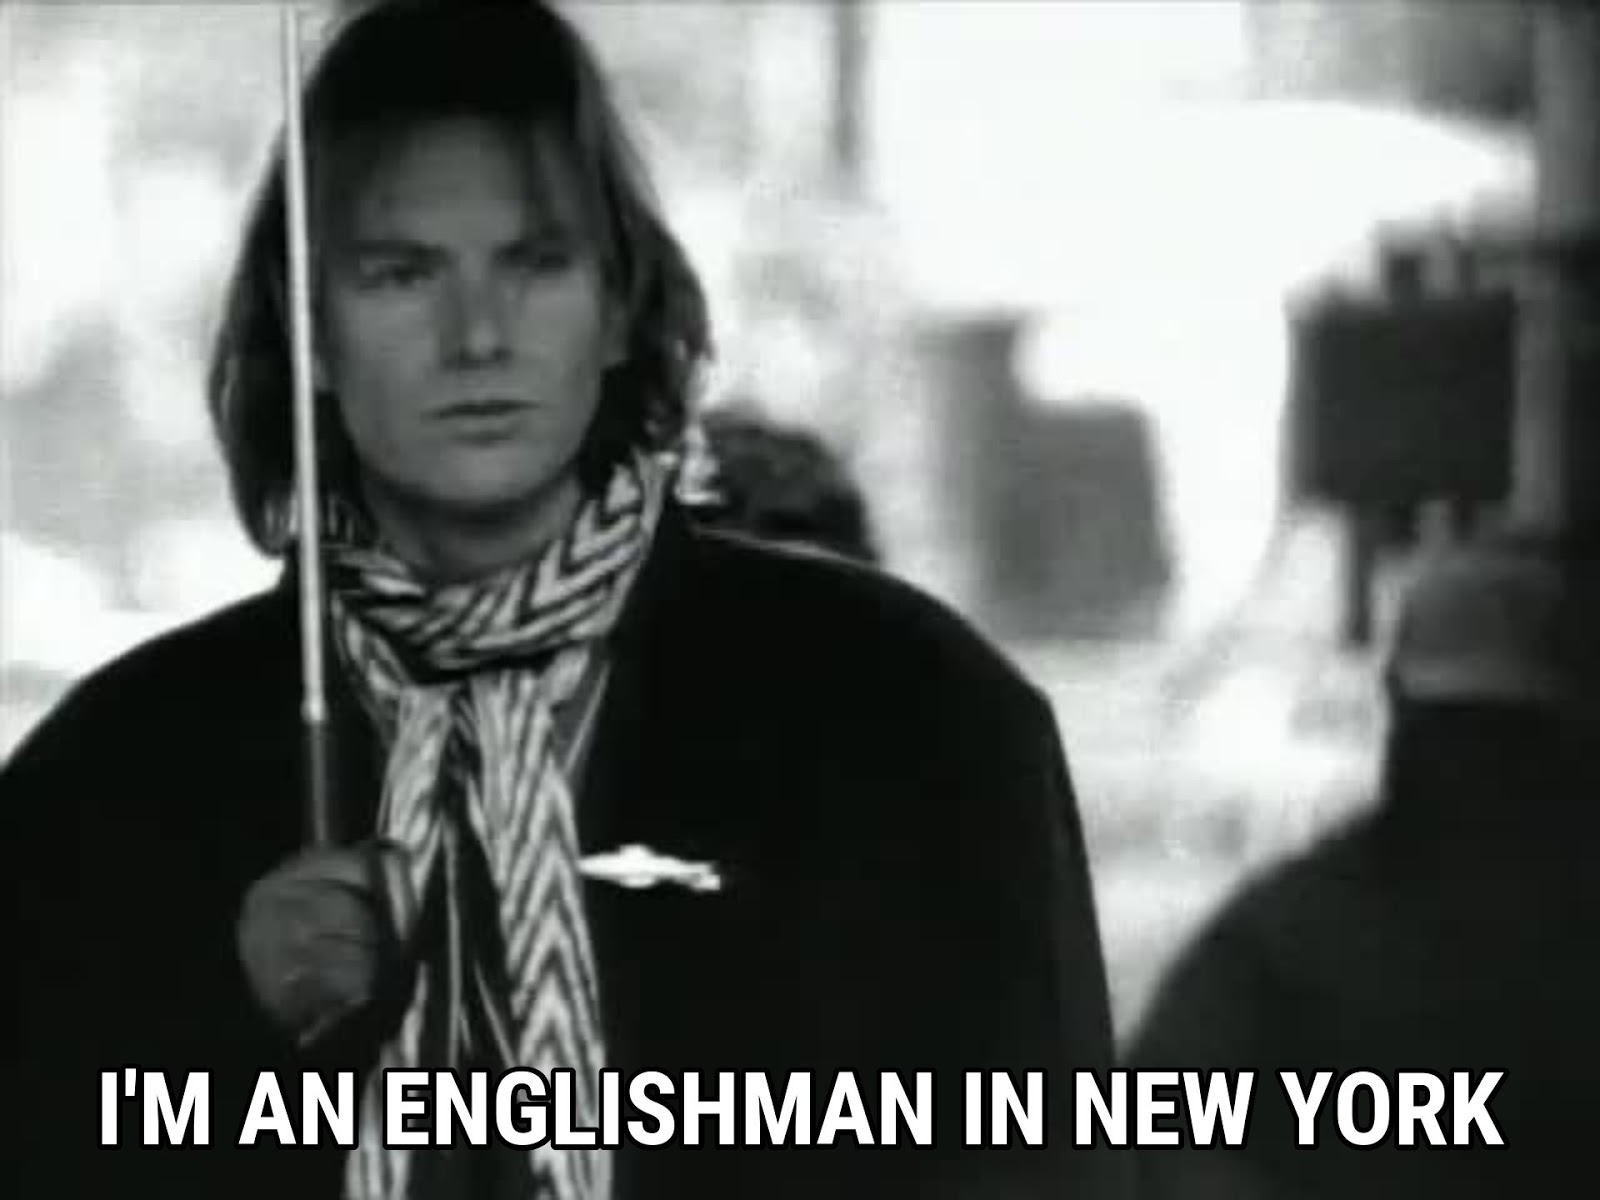 Инглиш мен ин. Стинг Инглиш мен ин Нью-Йорк. Стинг Englishman in New York. Стинг в молодости Englishman in New York. Sting Englishman in New York обложка.